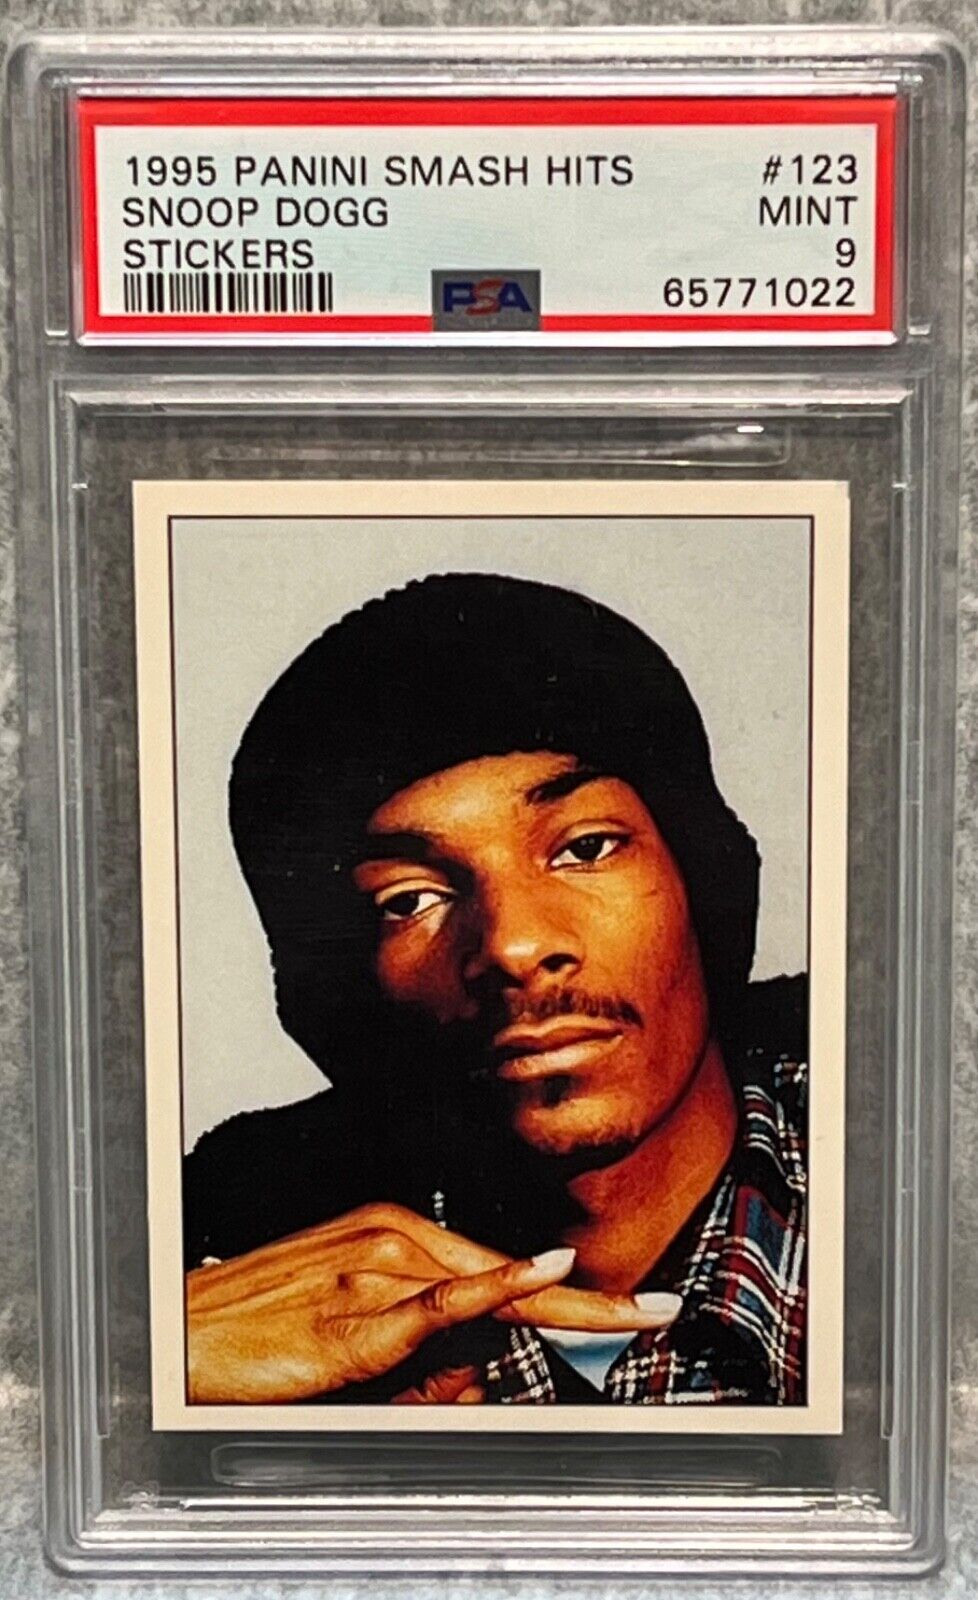 1995 Panini Smash Hits Snoop Dogg Rookie PSA 9 Mint Condition High Grade RC